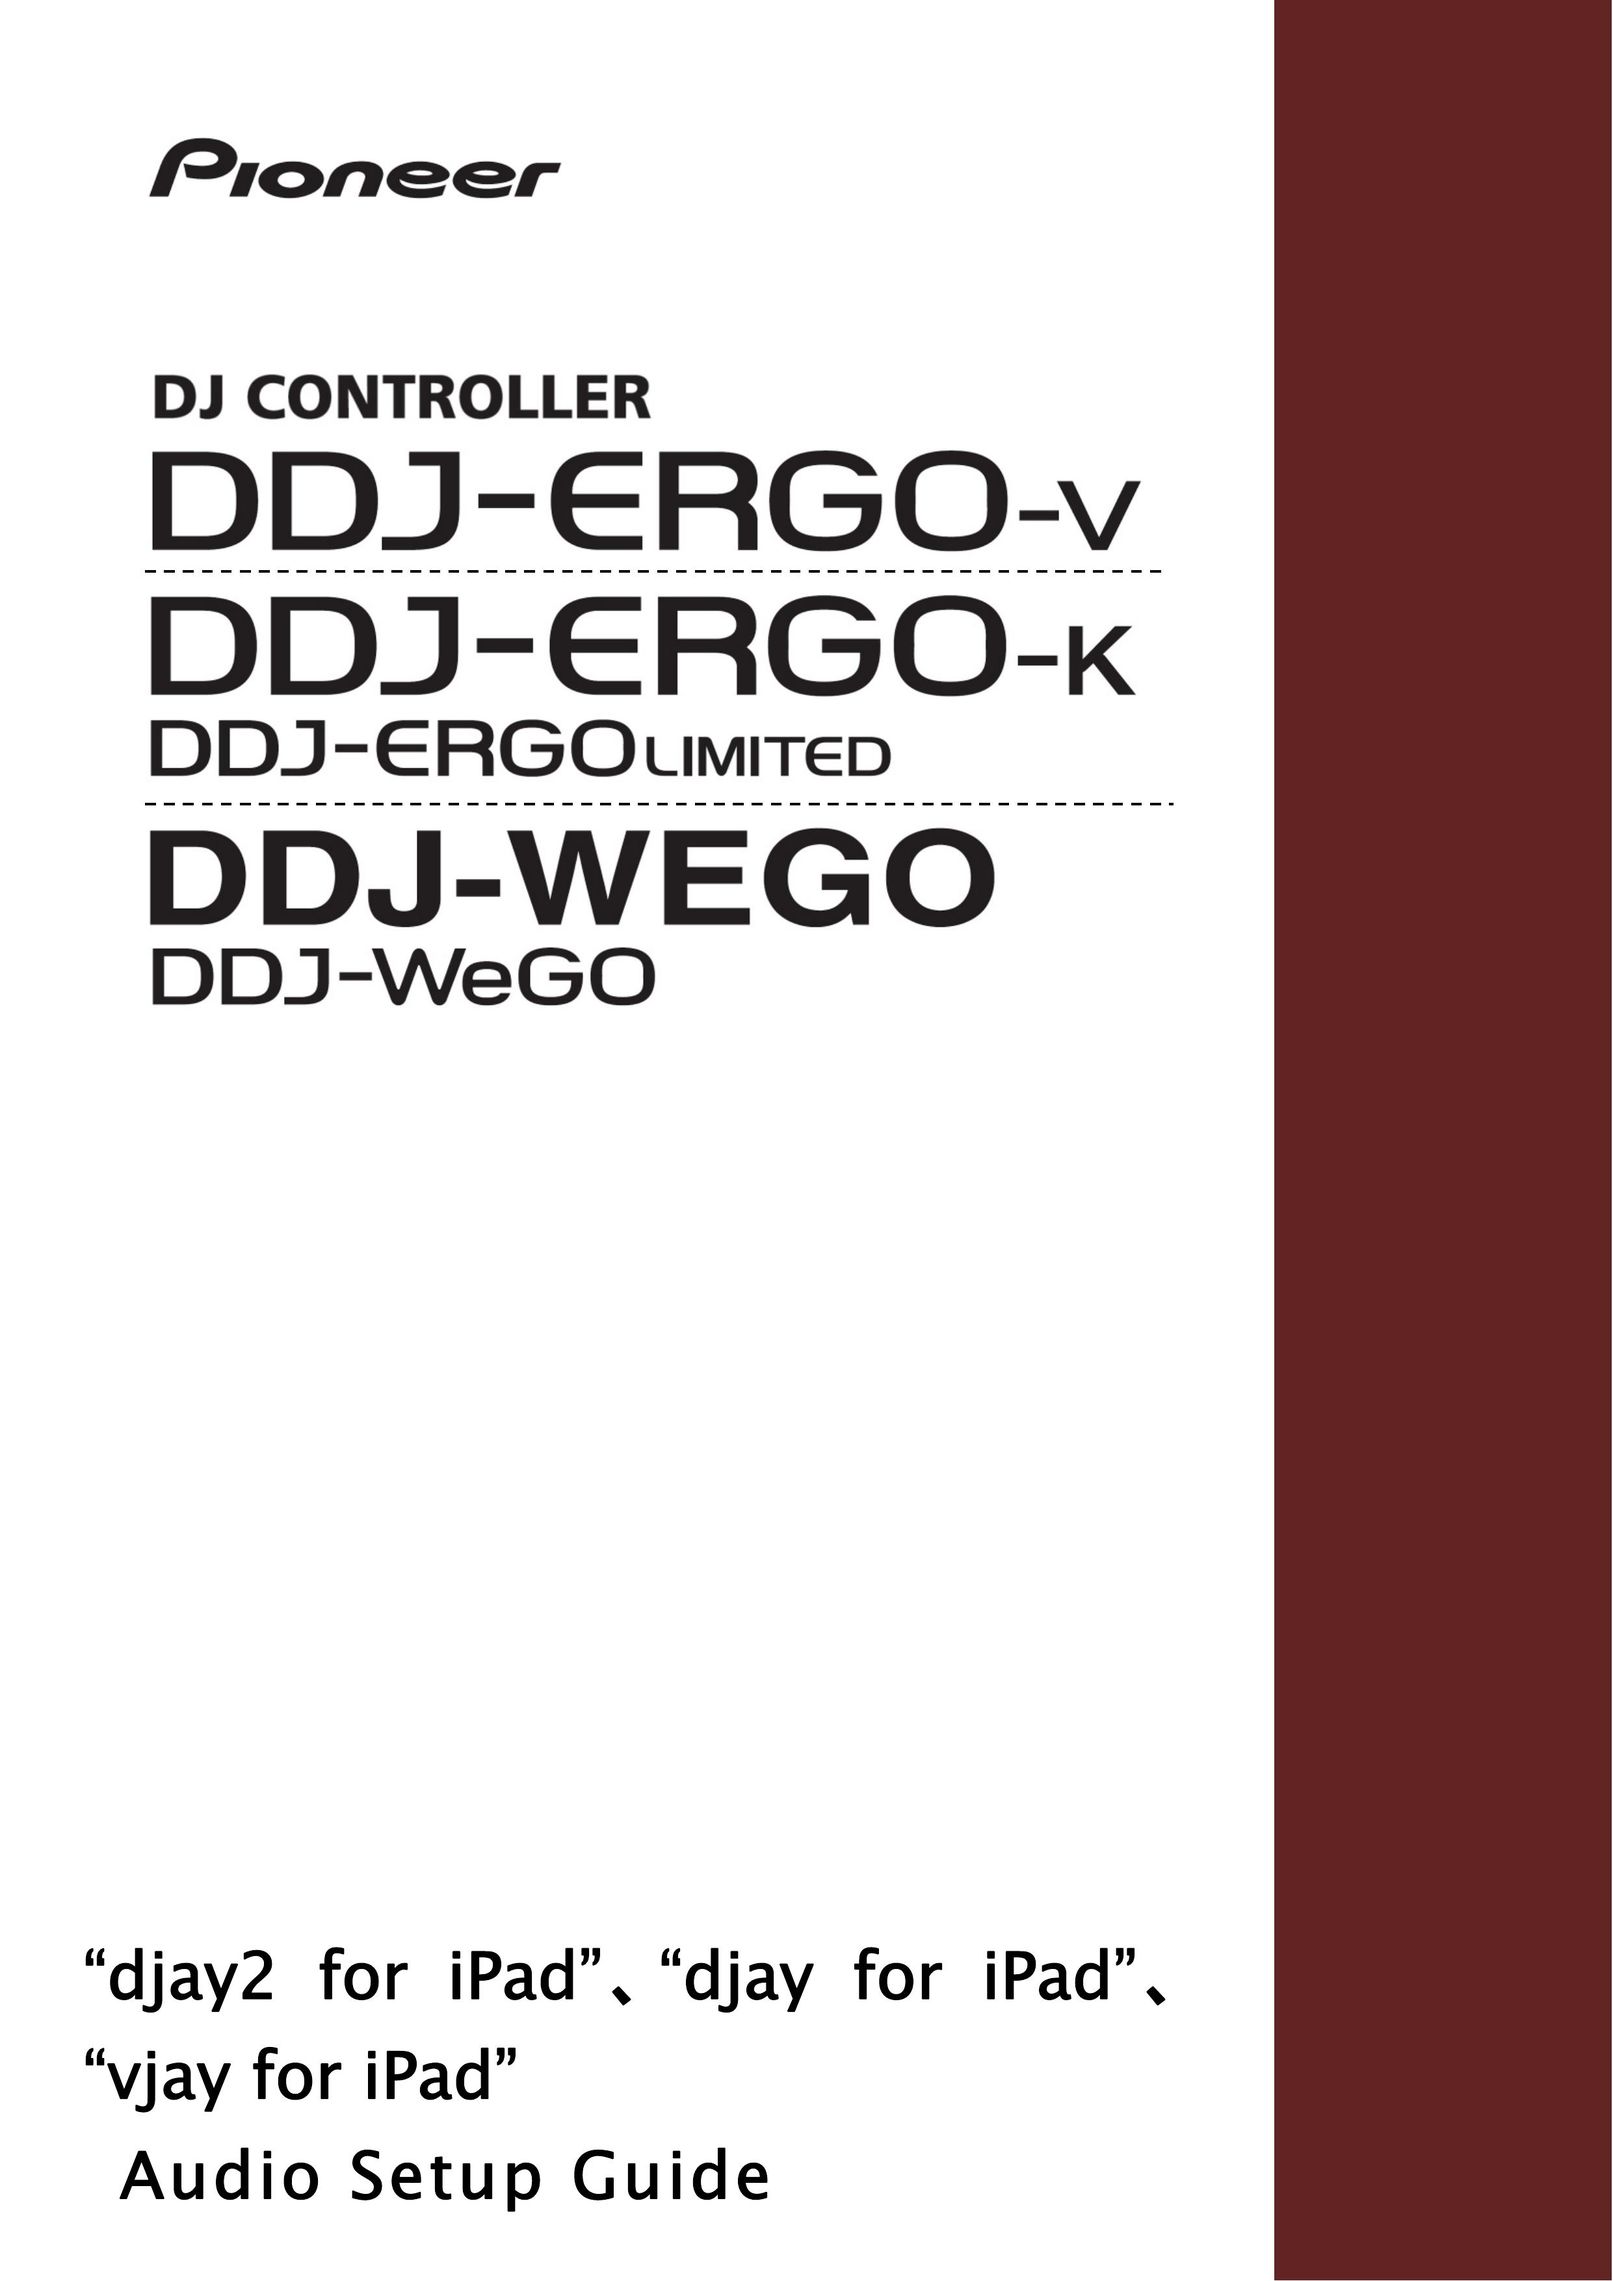 Pioneer DDJ-ERGO-V Video Game Controller User Manual